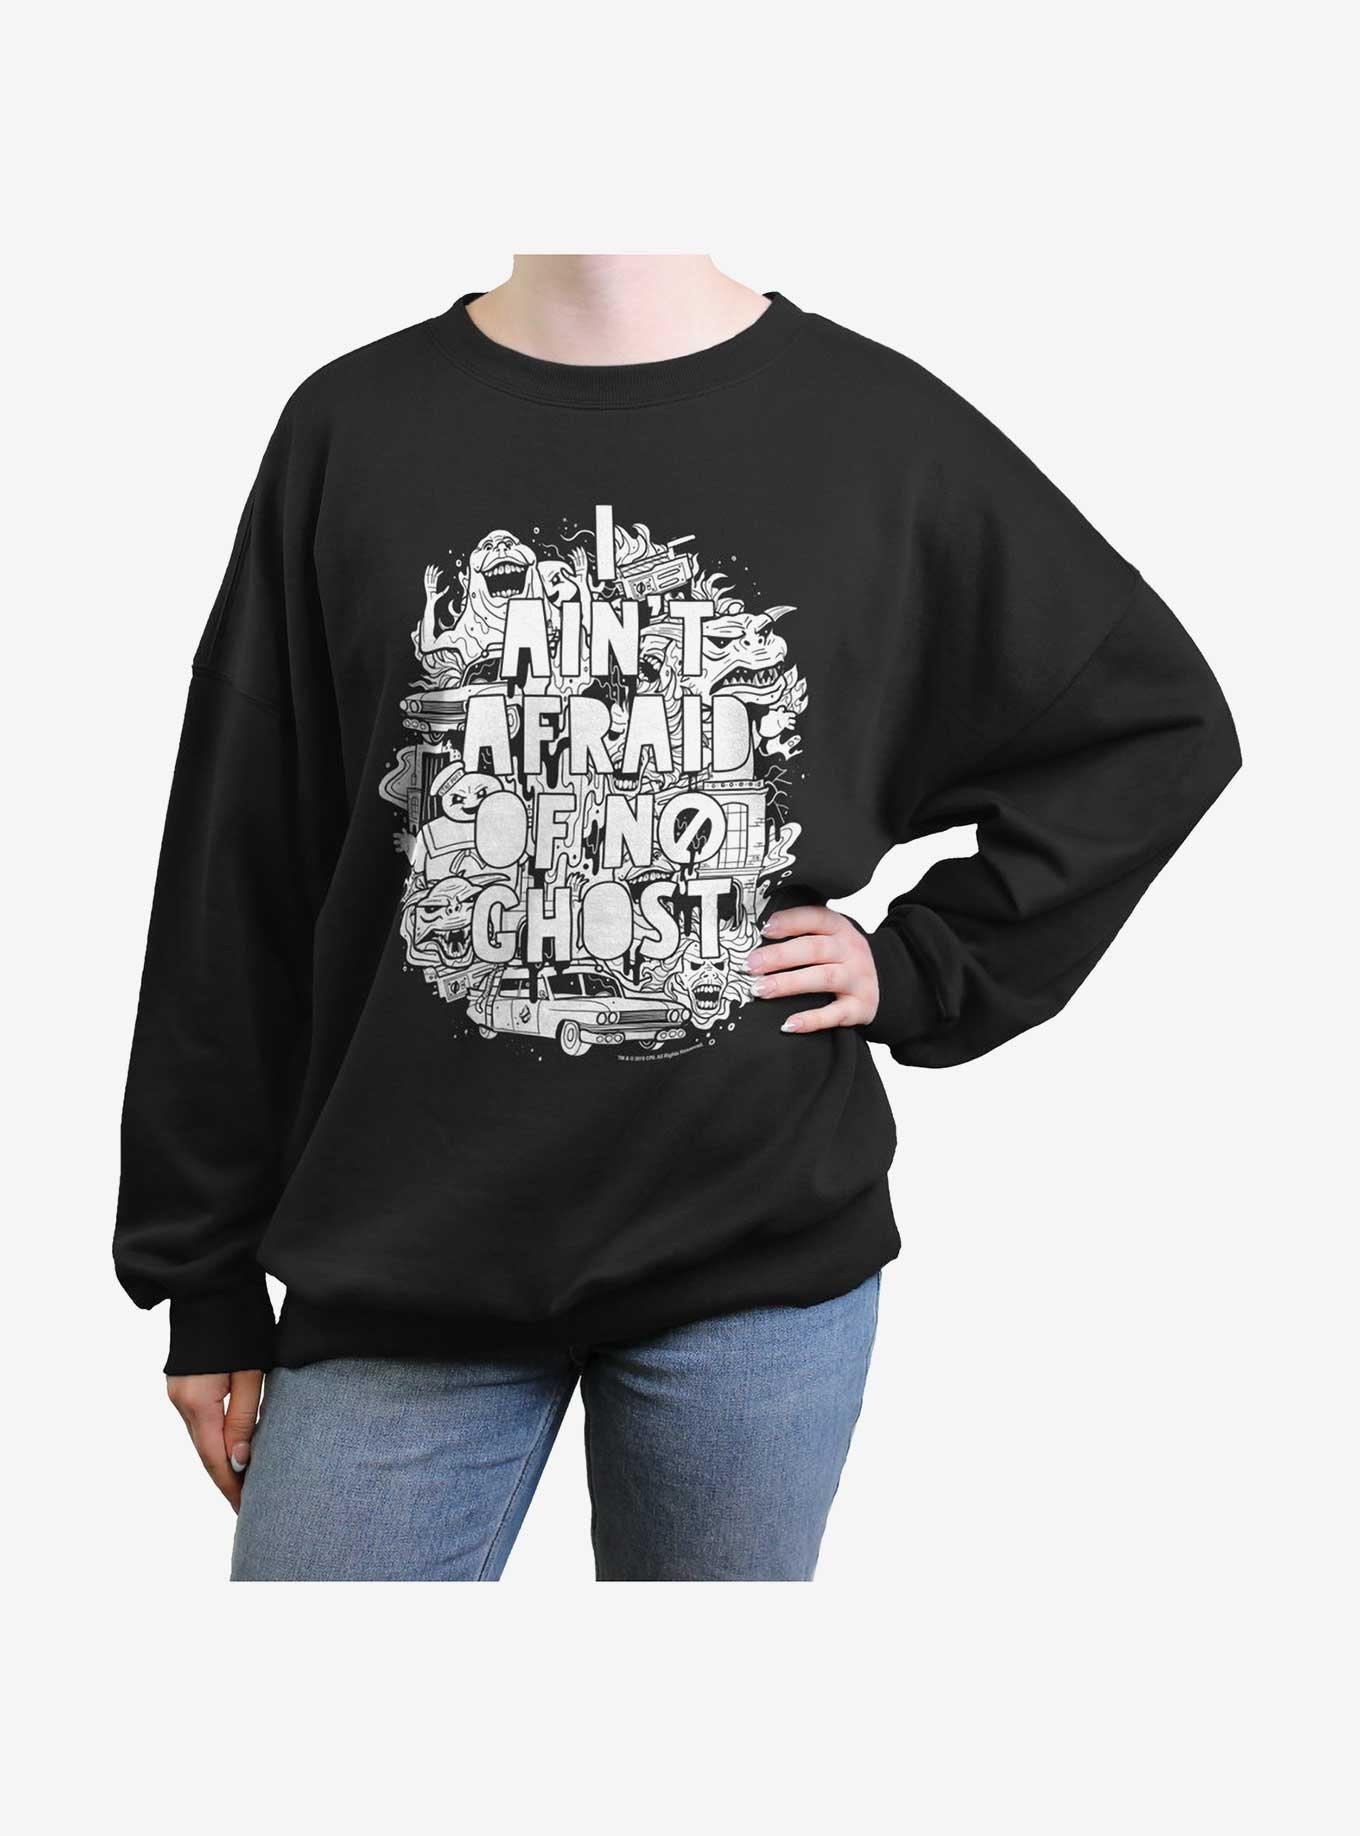 Ghostbusters Ain't Afraid Of No Ghost Girls Oversized Sweatshirt